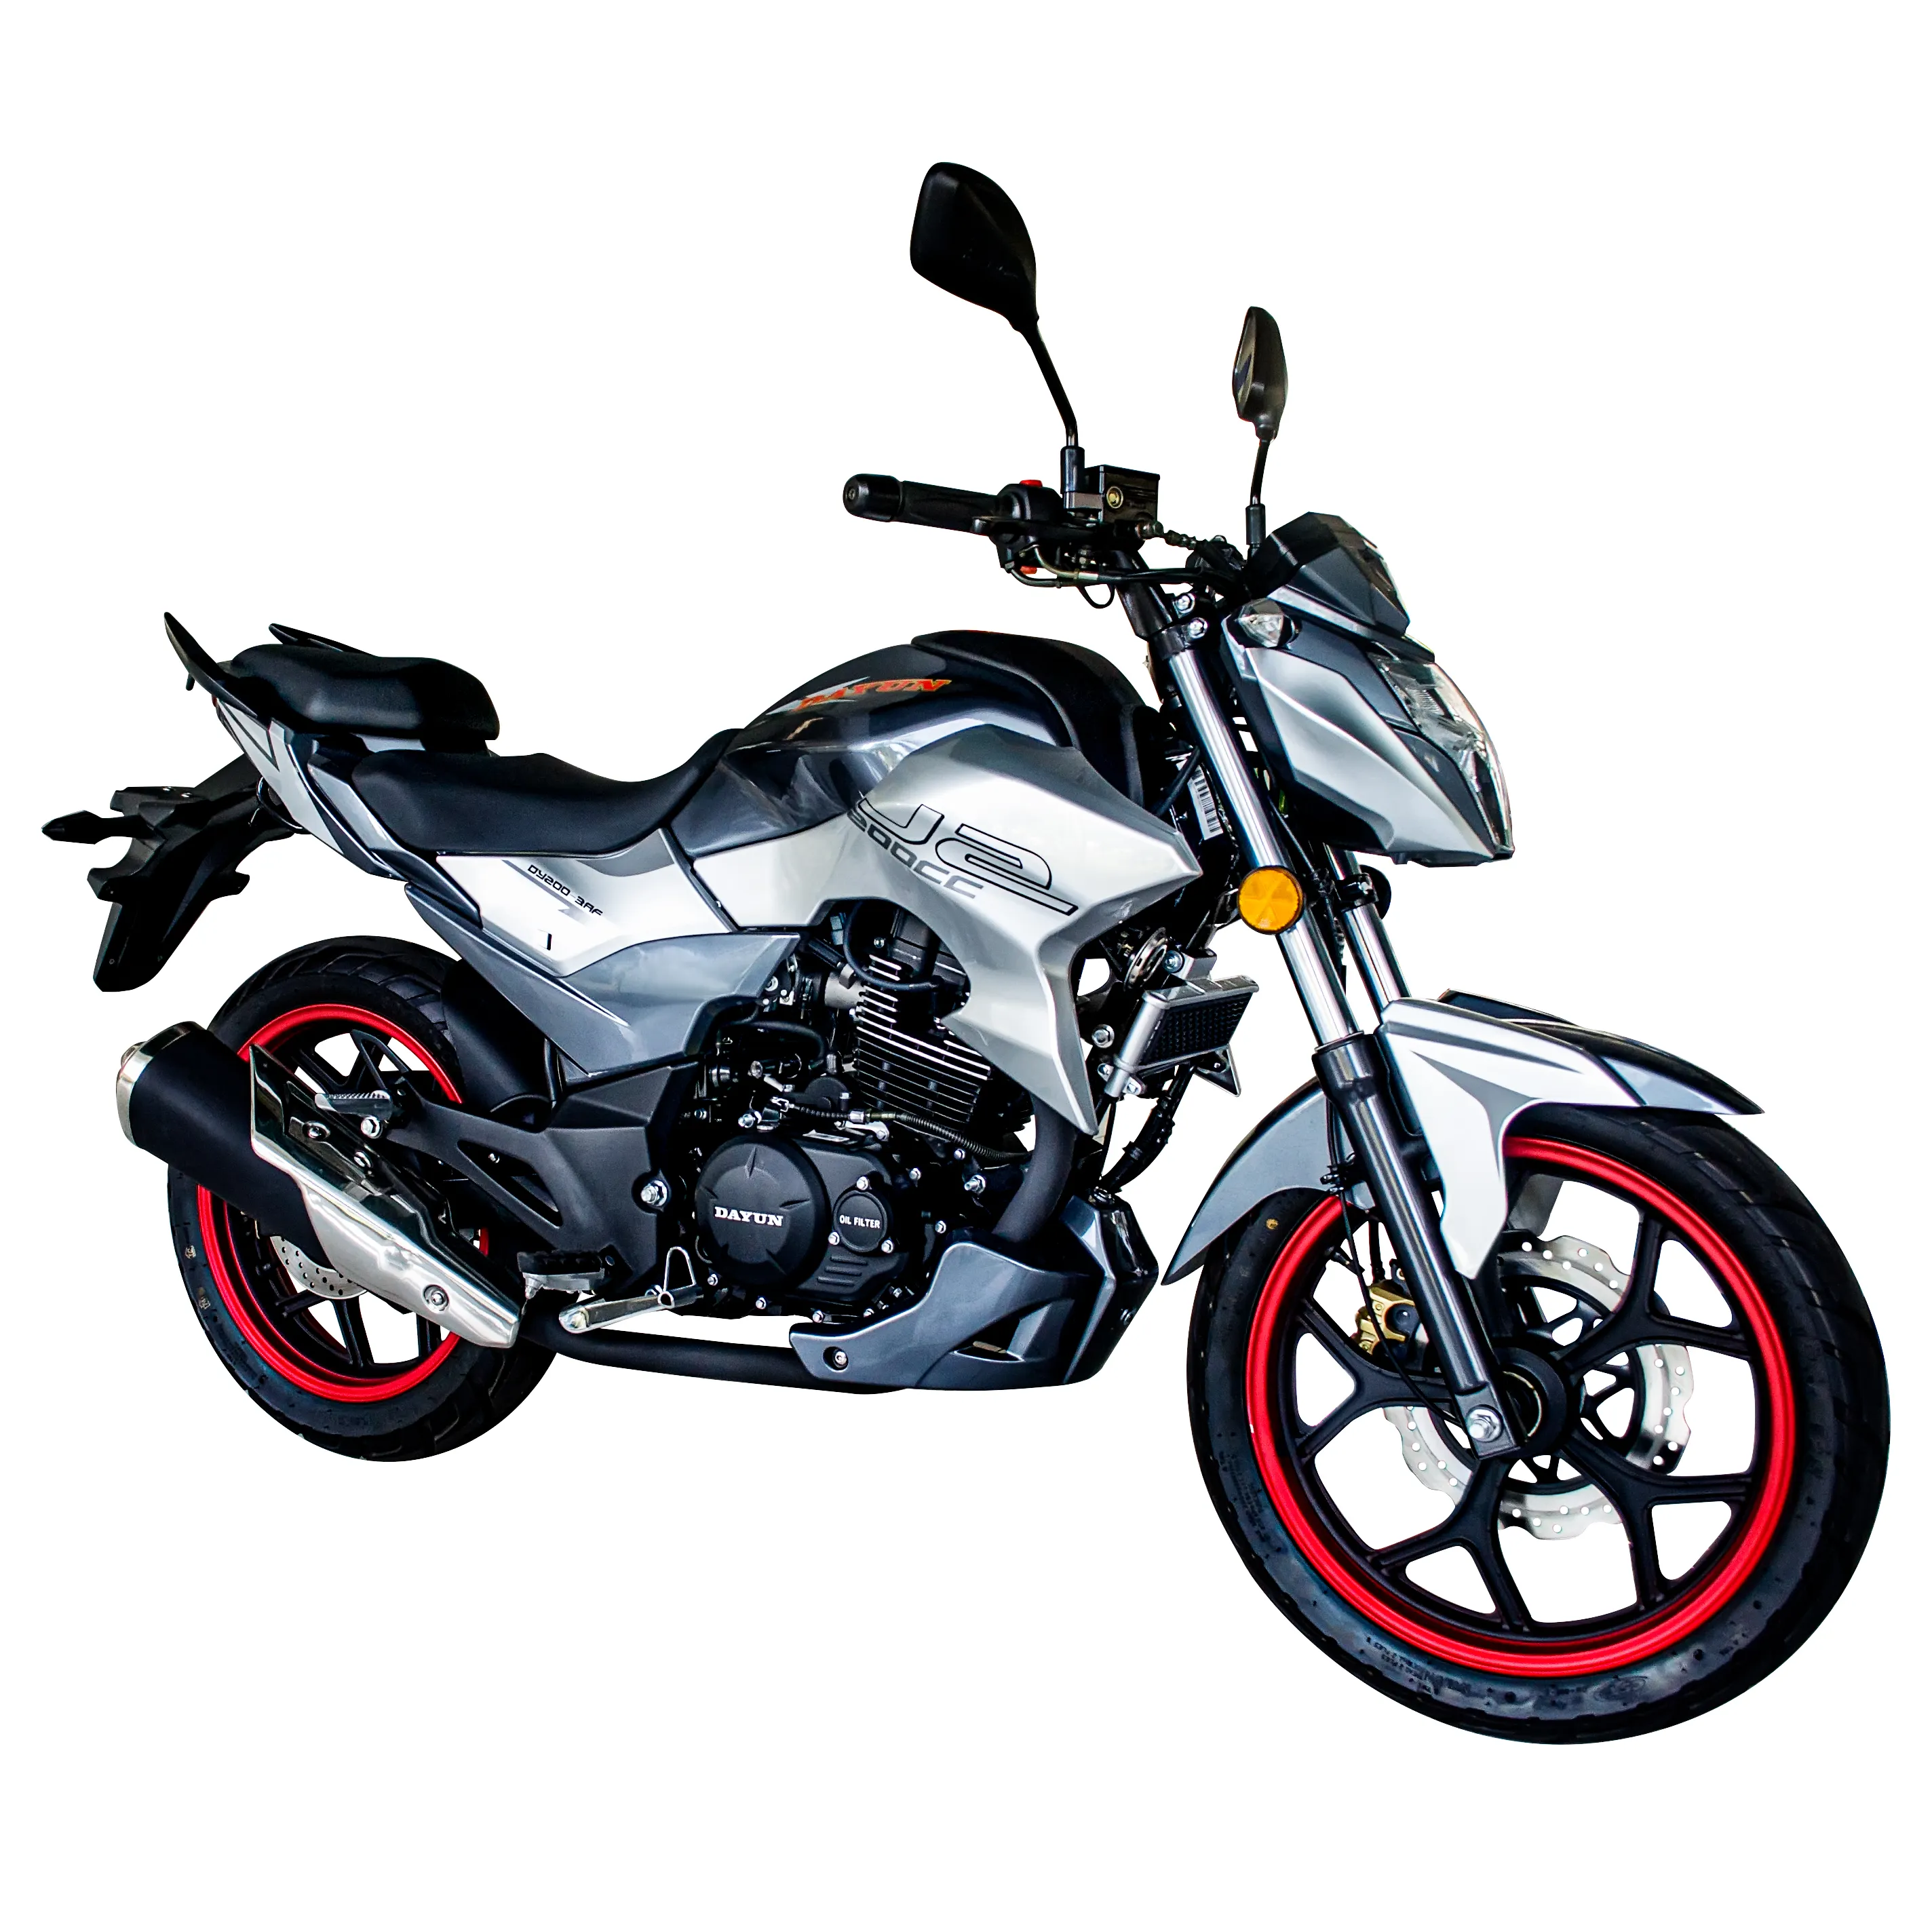 Motocicleta DAYUN MARCA, 1 pistón, 2 válvulas EDF Overhead Cam Oil Cool Engine Motocicleta